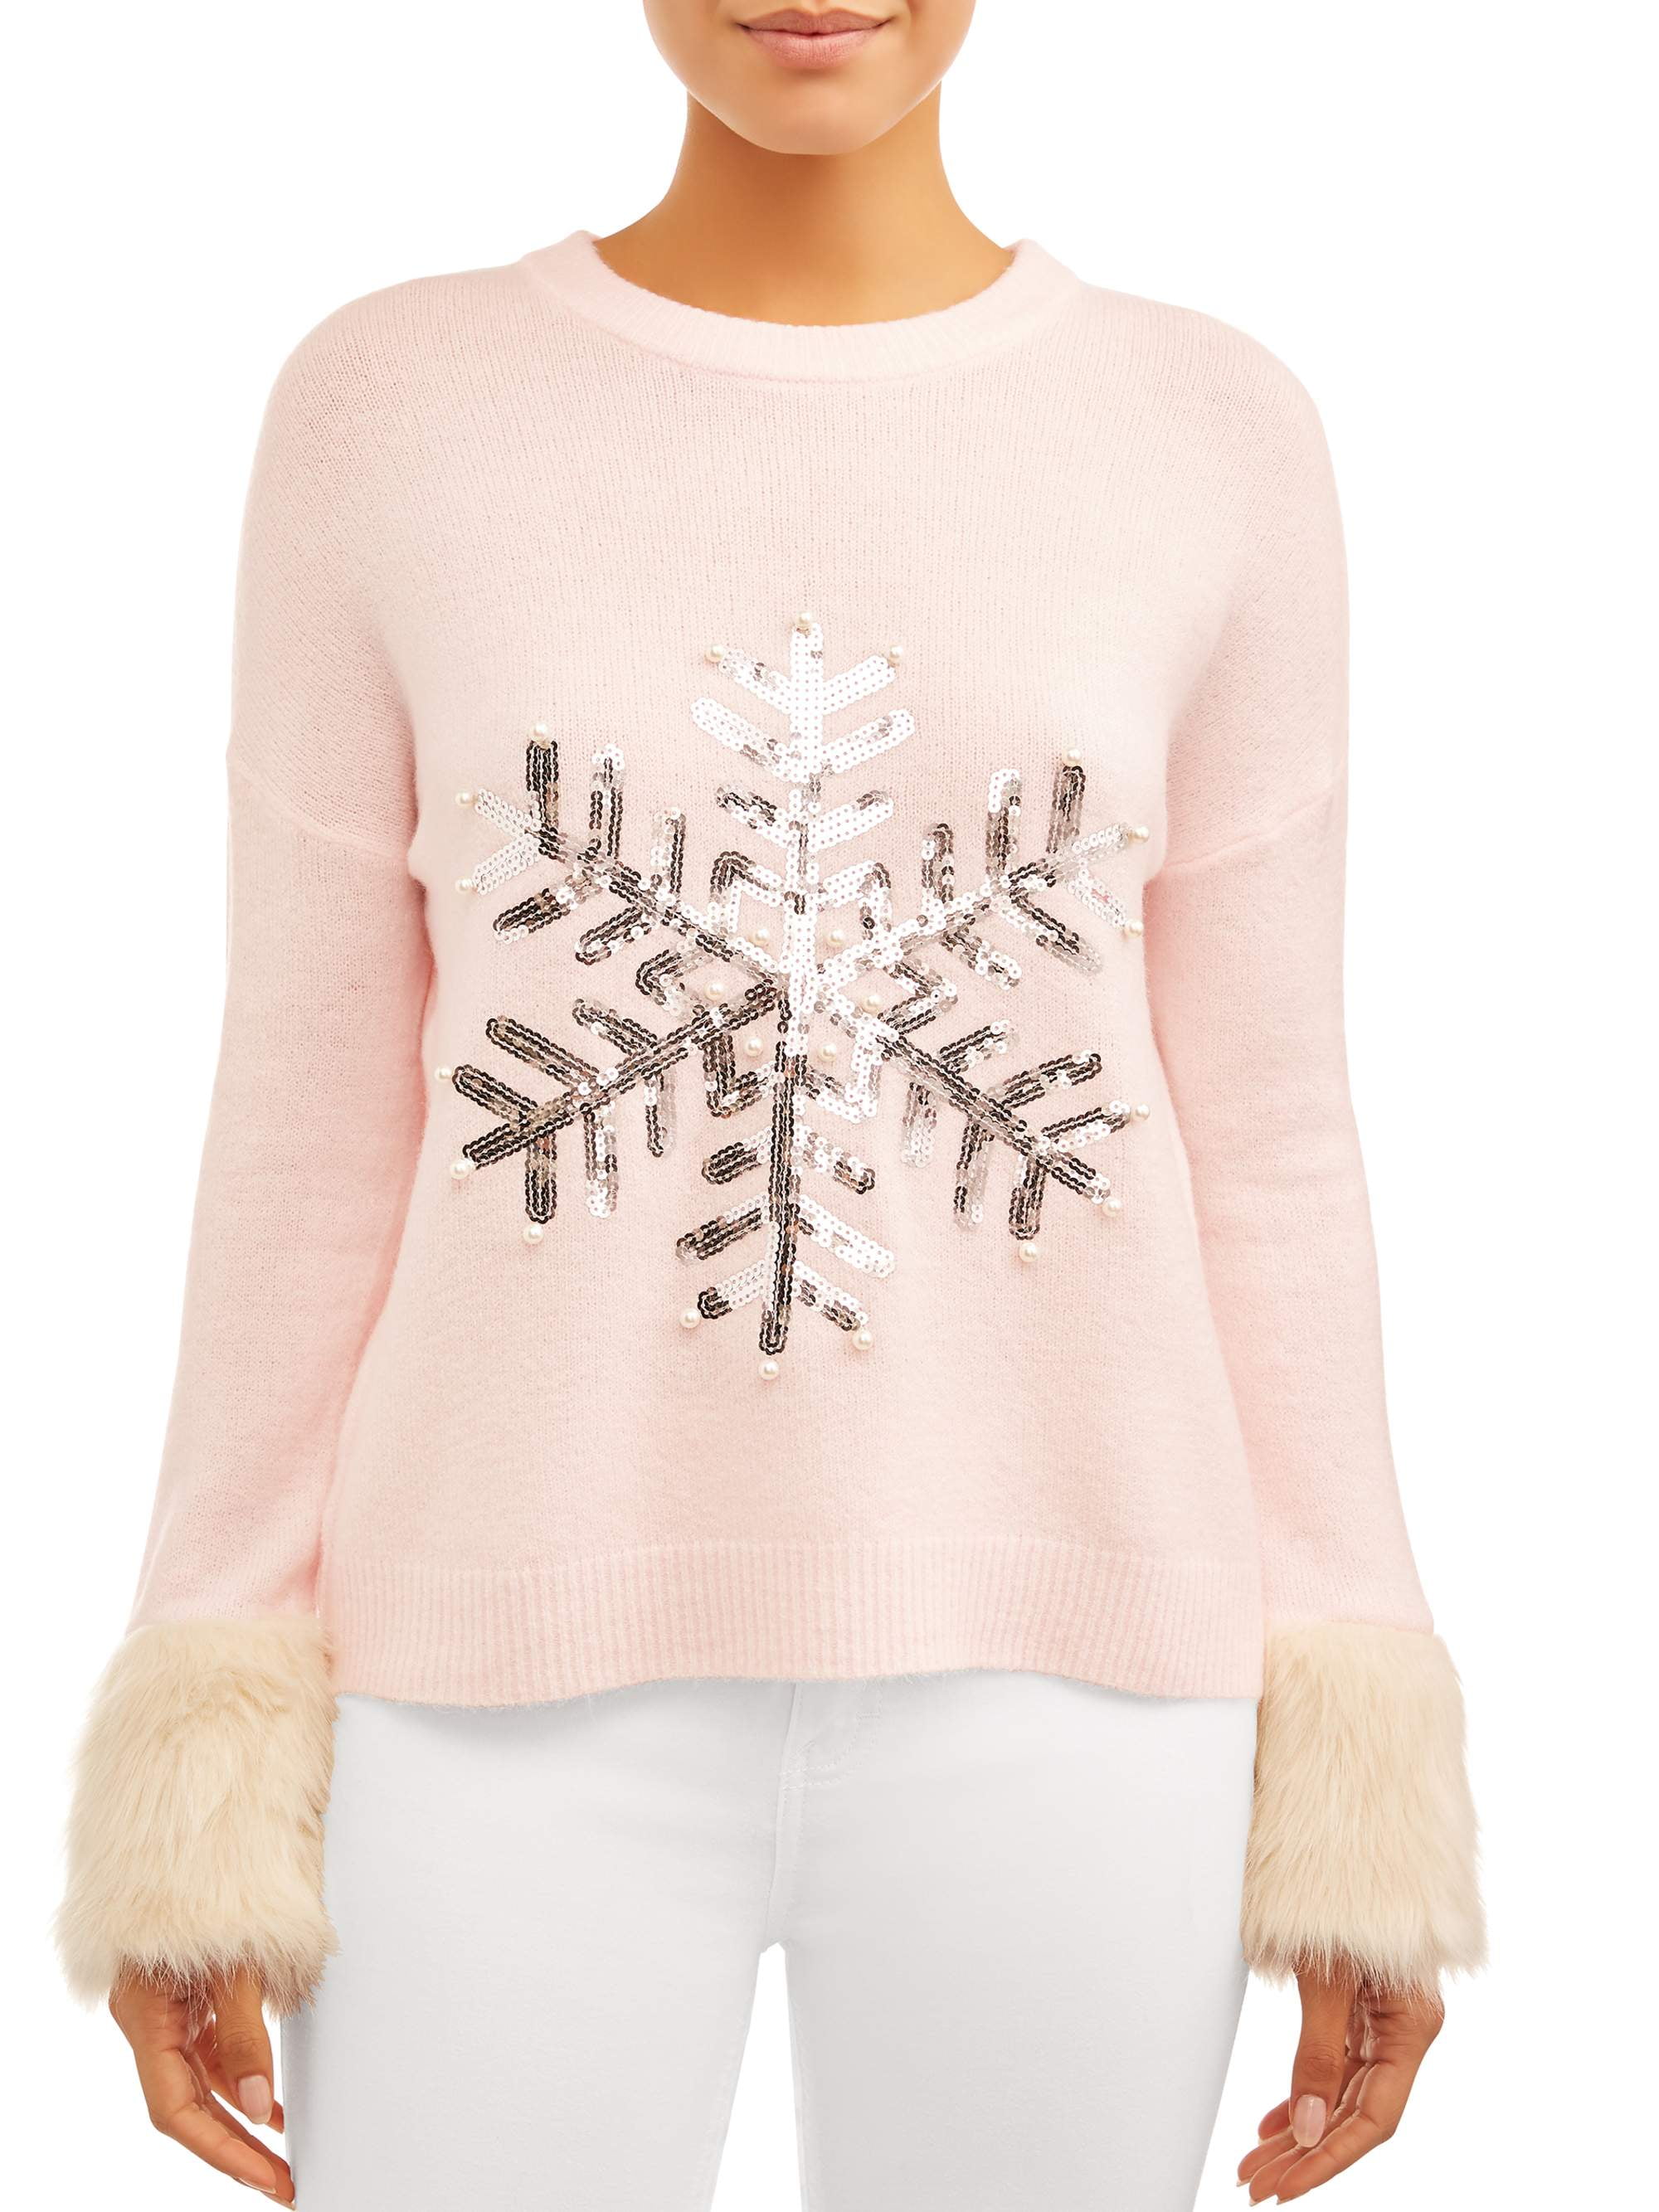 Pullover Sweatshirt Top Blouse JKRED Fashion Women Casual Cat Snowflake Plaid Christmas